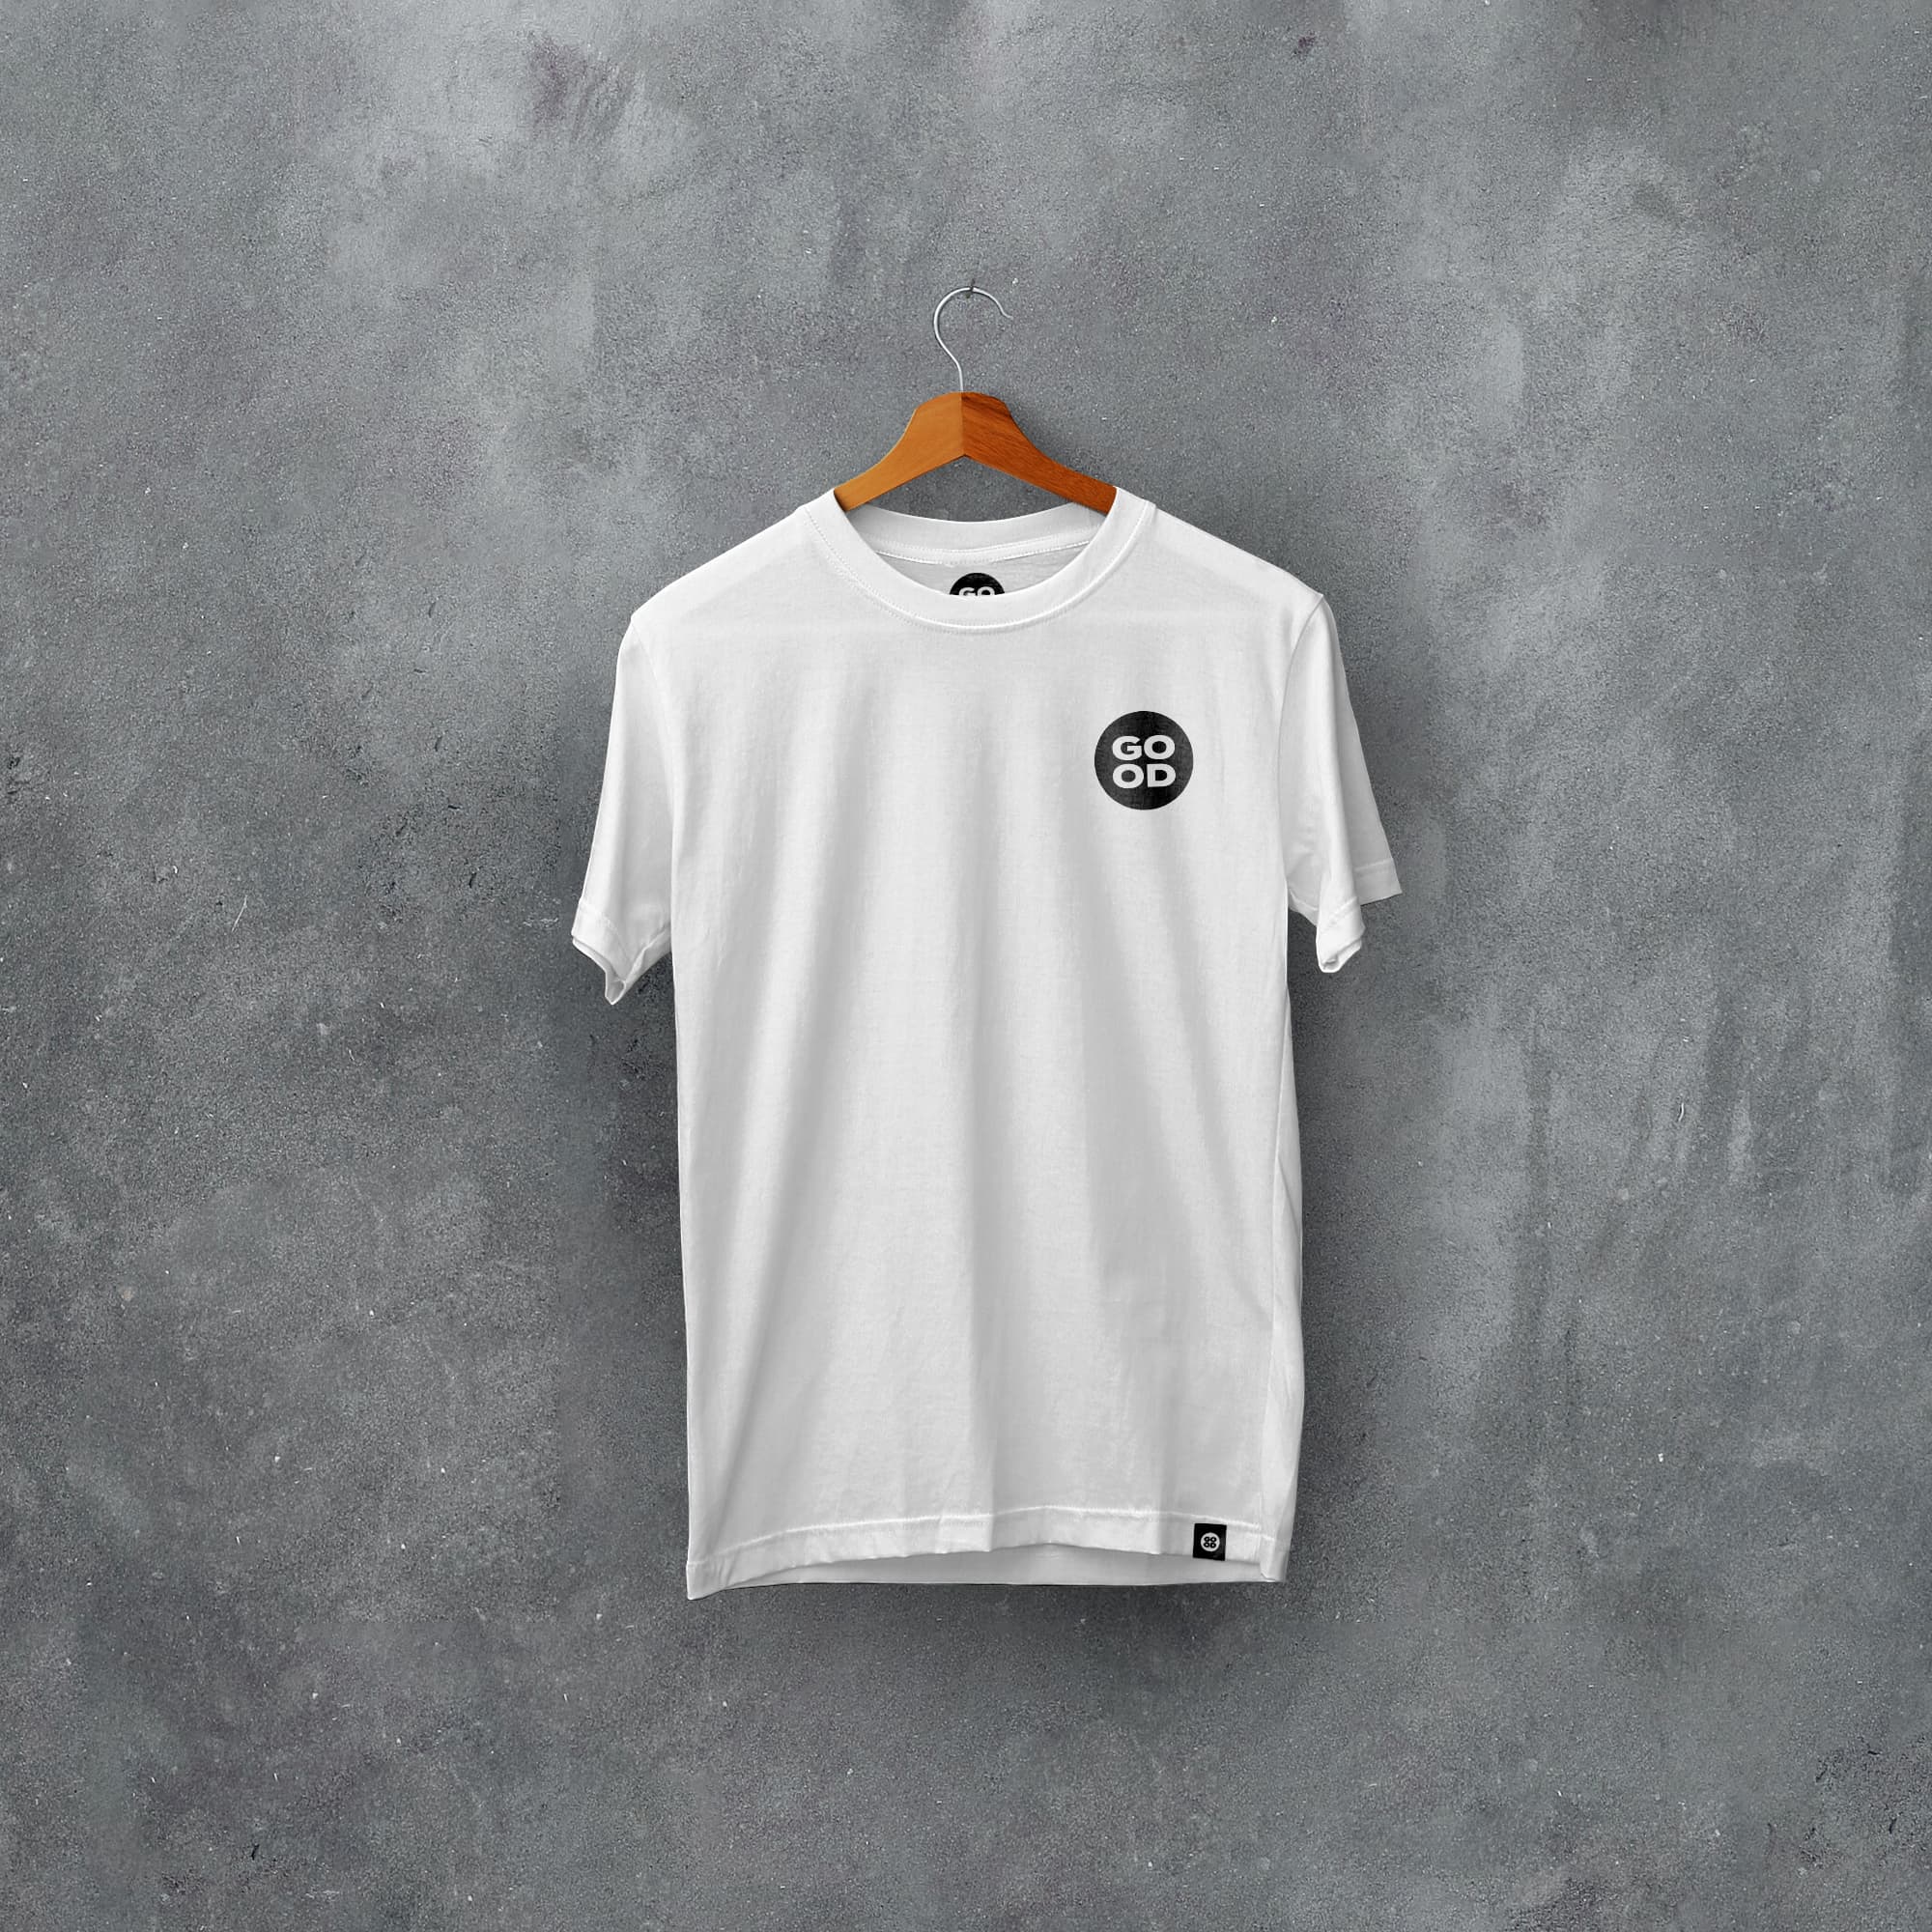 Port Vale Classic Kits Football T-Shirt